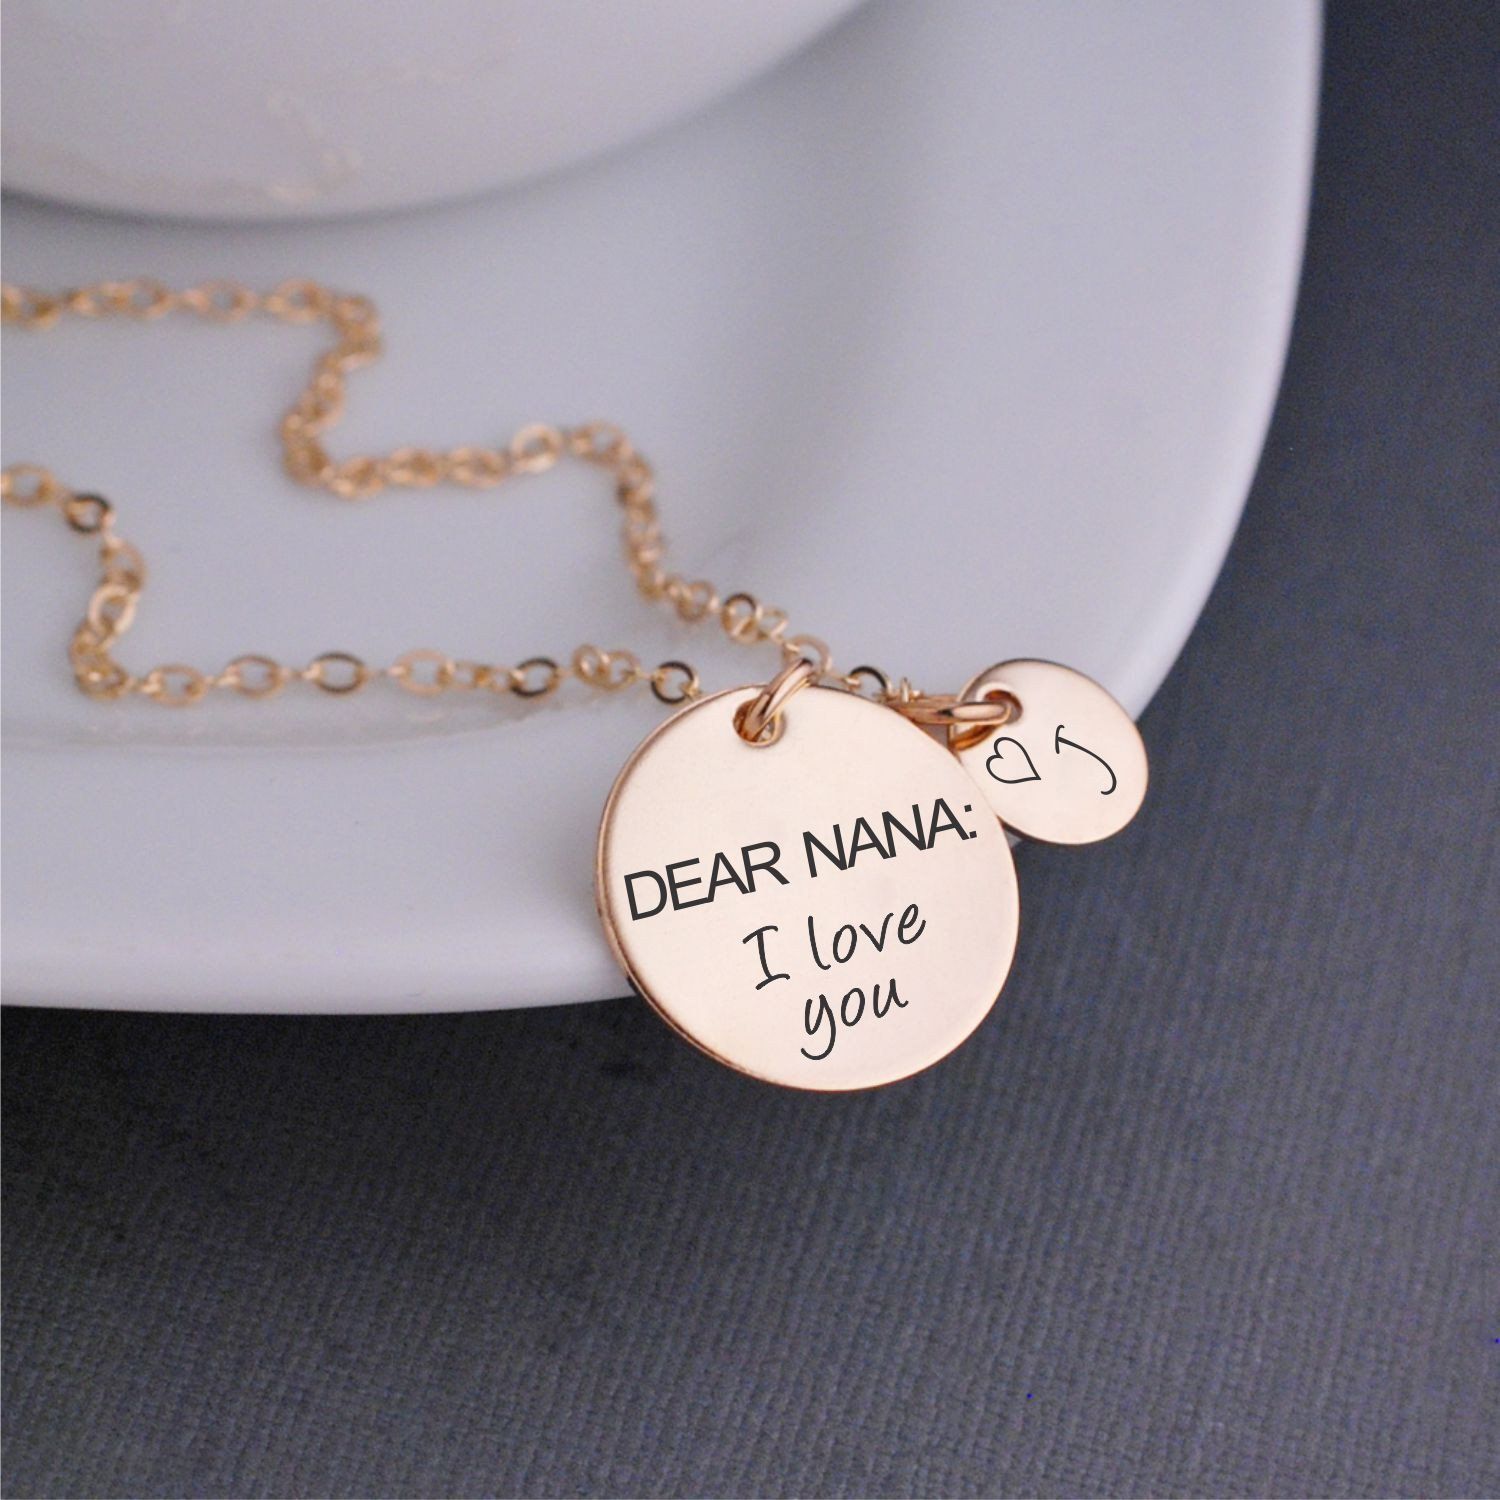 Dear Nana: I Love You Necklace – Necklace – georgiedesigns